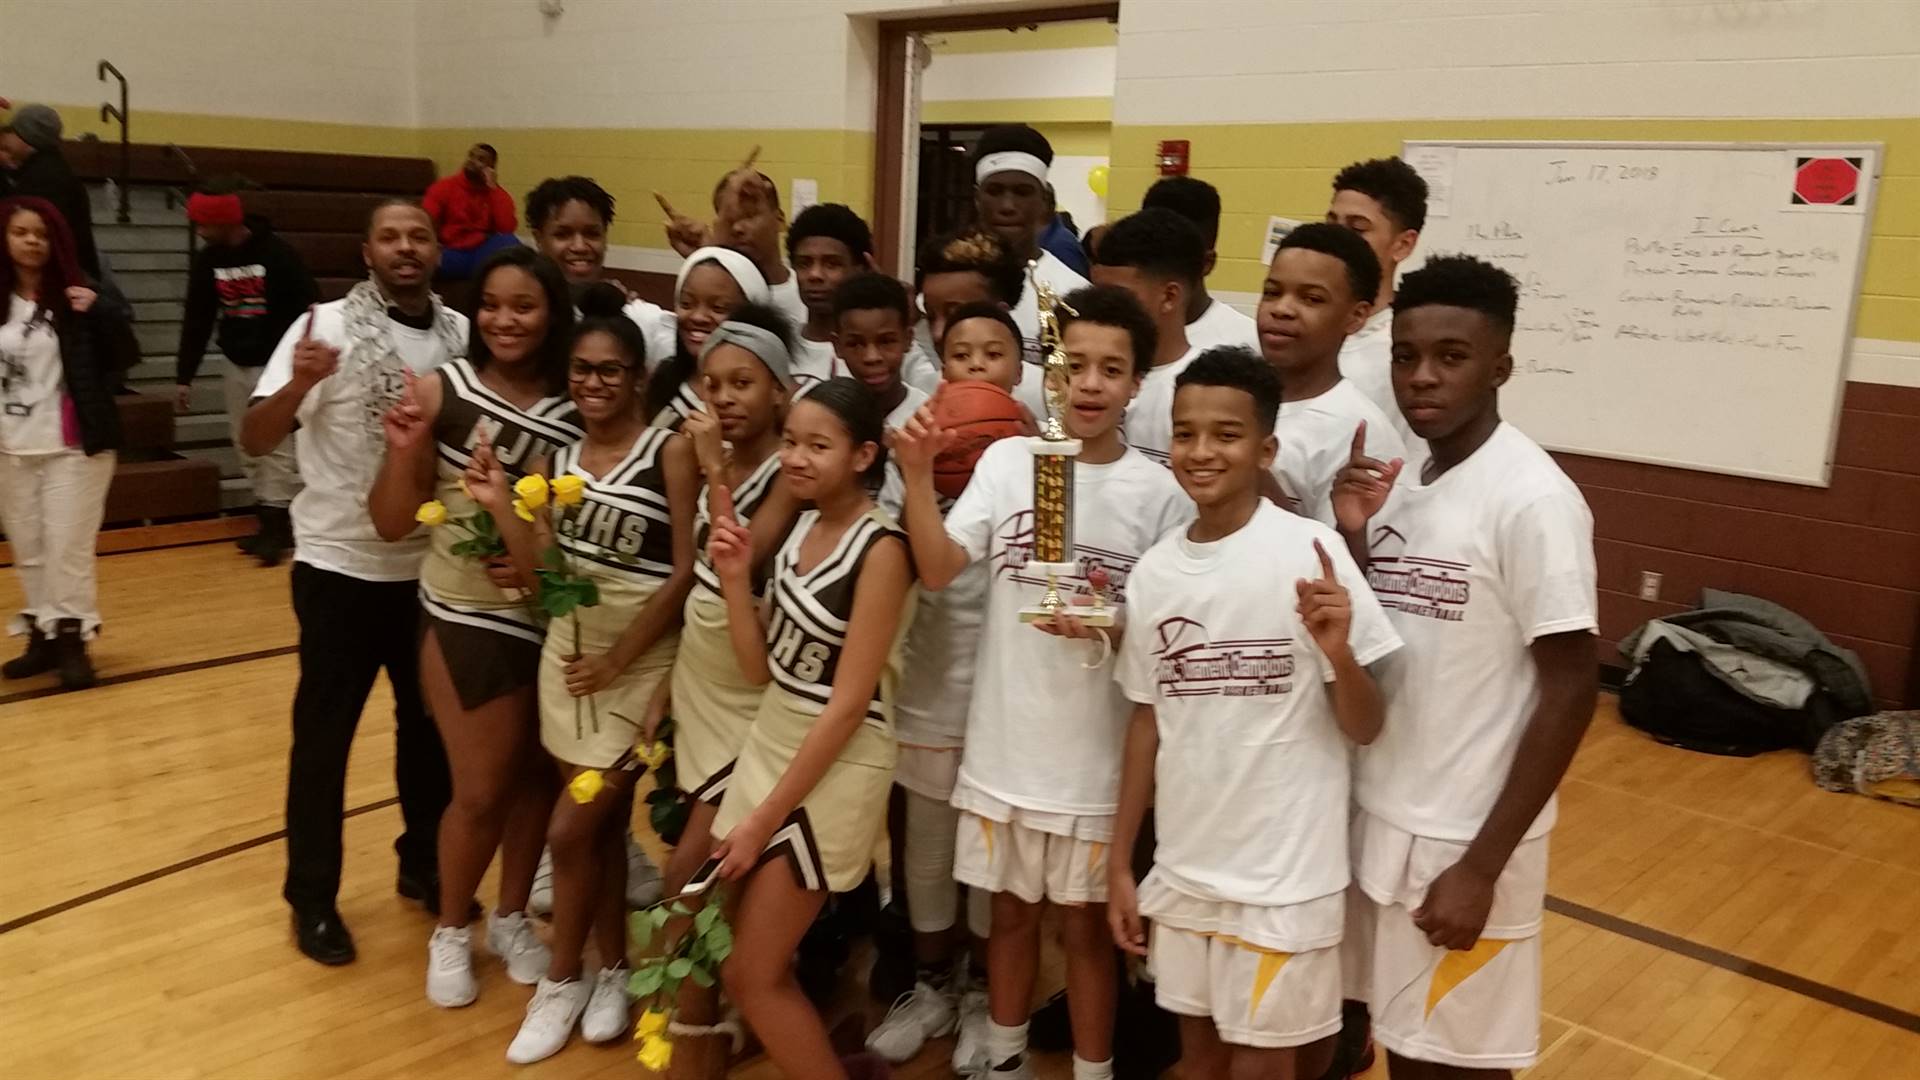 8th Grade Boys Basketball and Cheerleaders